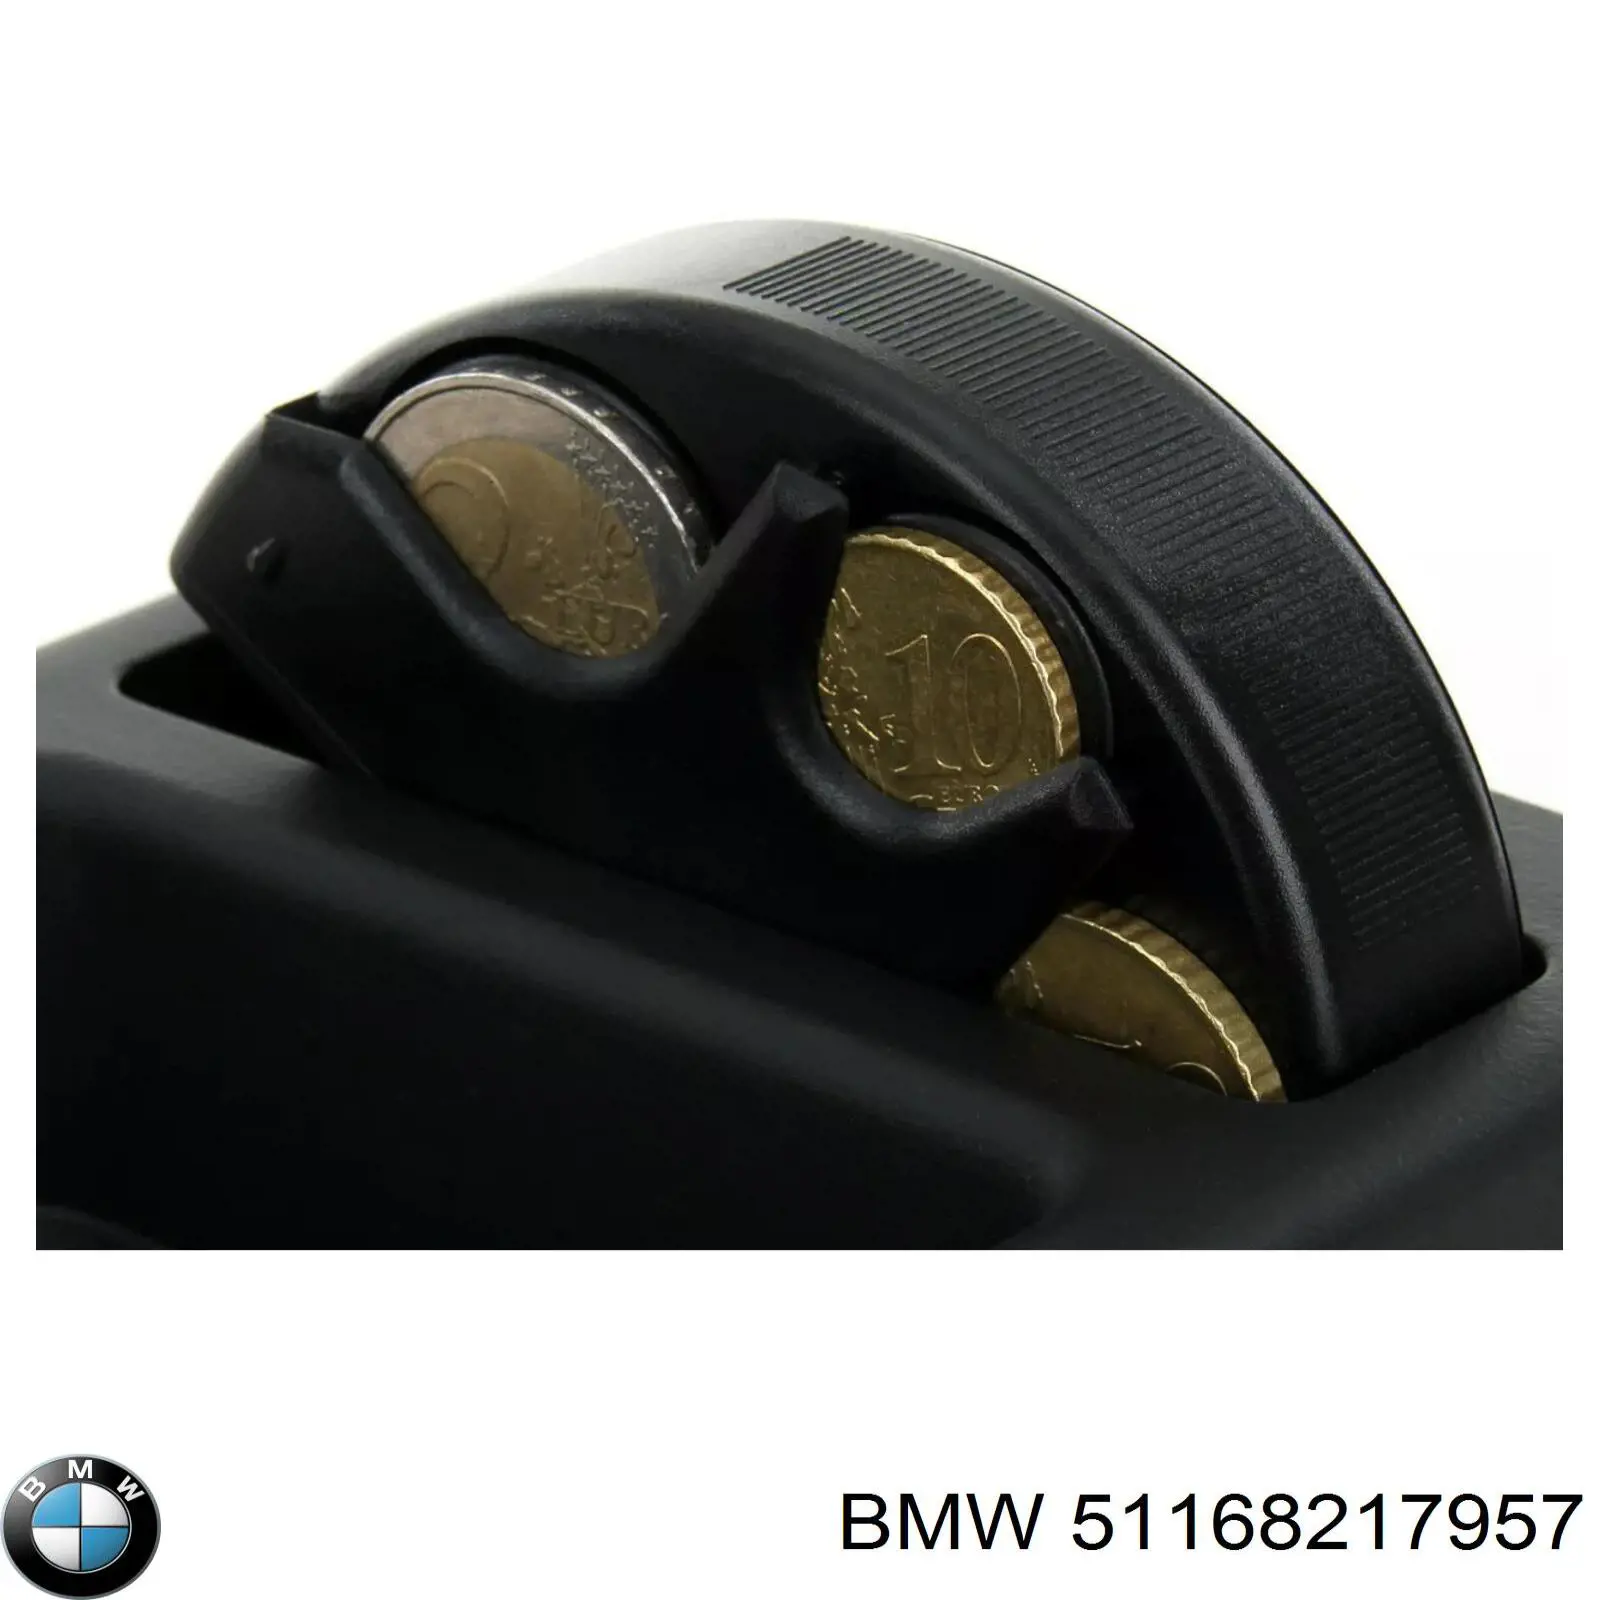 Nty вставка пластиковая для монет на BMW 3 (E46)